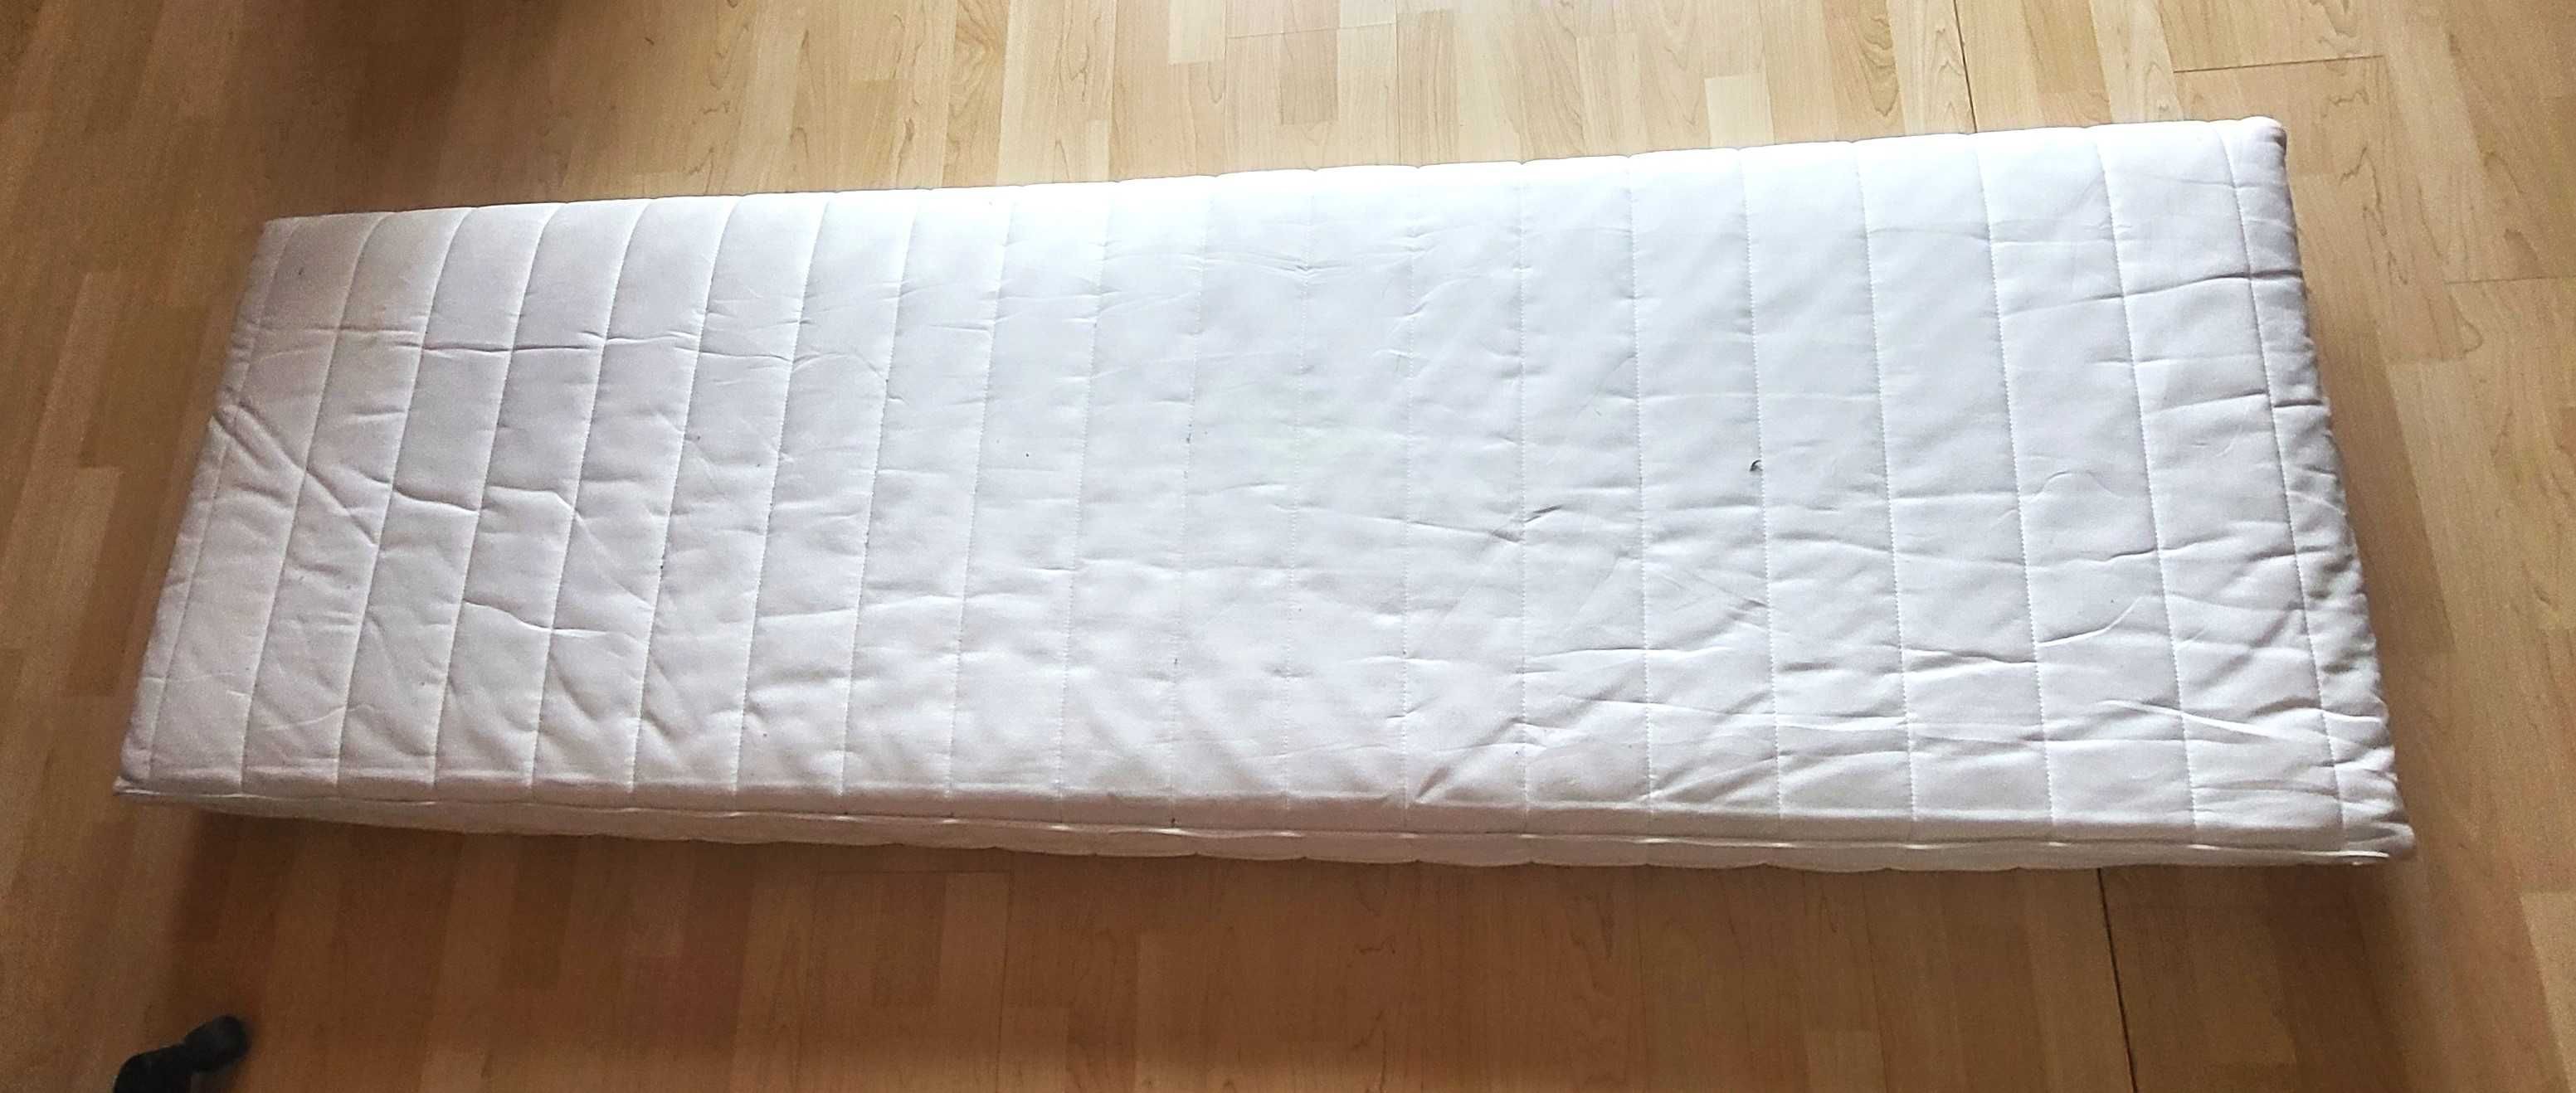 IKEA SULTAN Beddinge  Lovas materac  mattress матрац TRANSPORT GRATIS